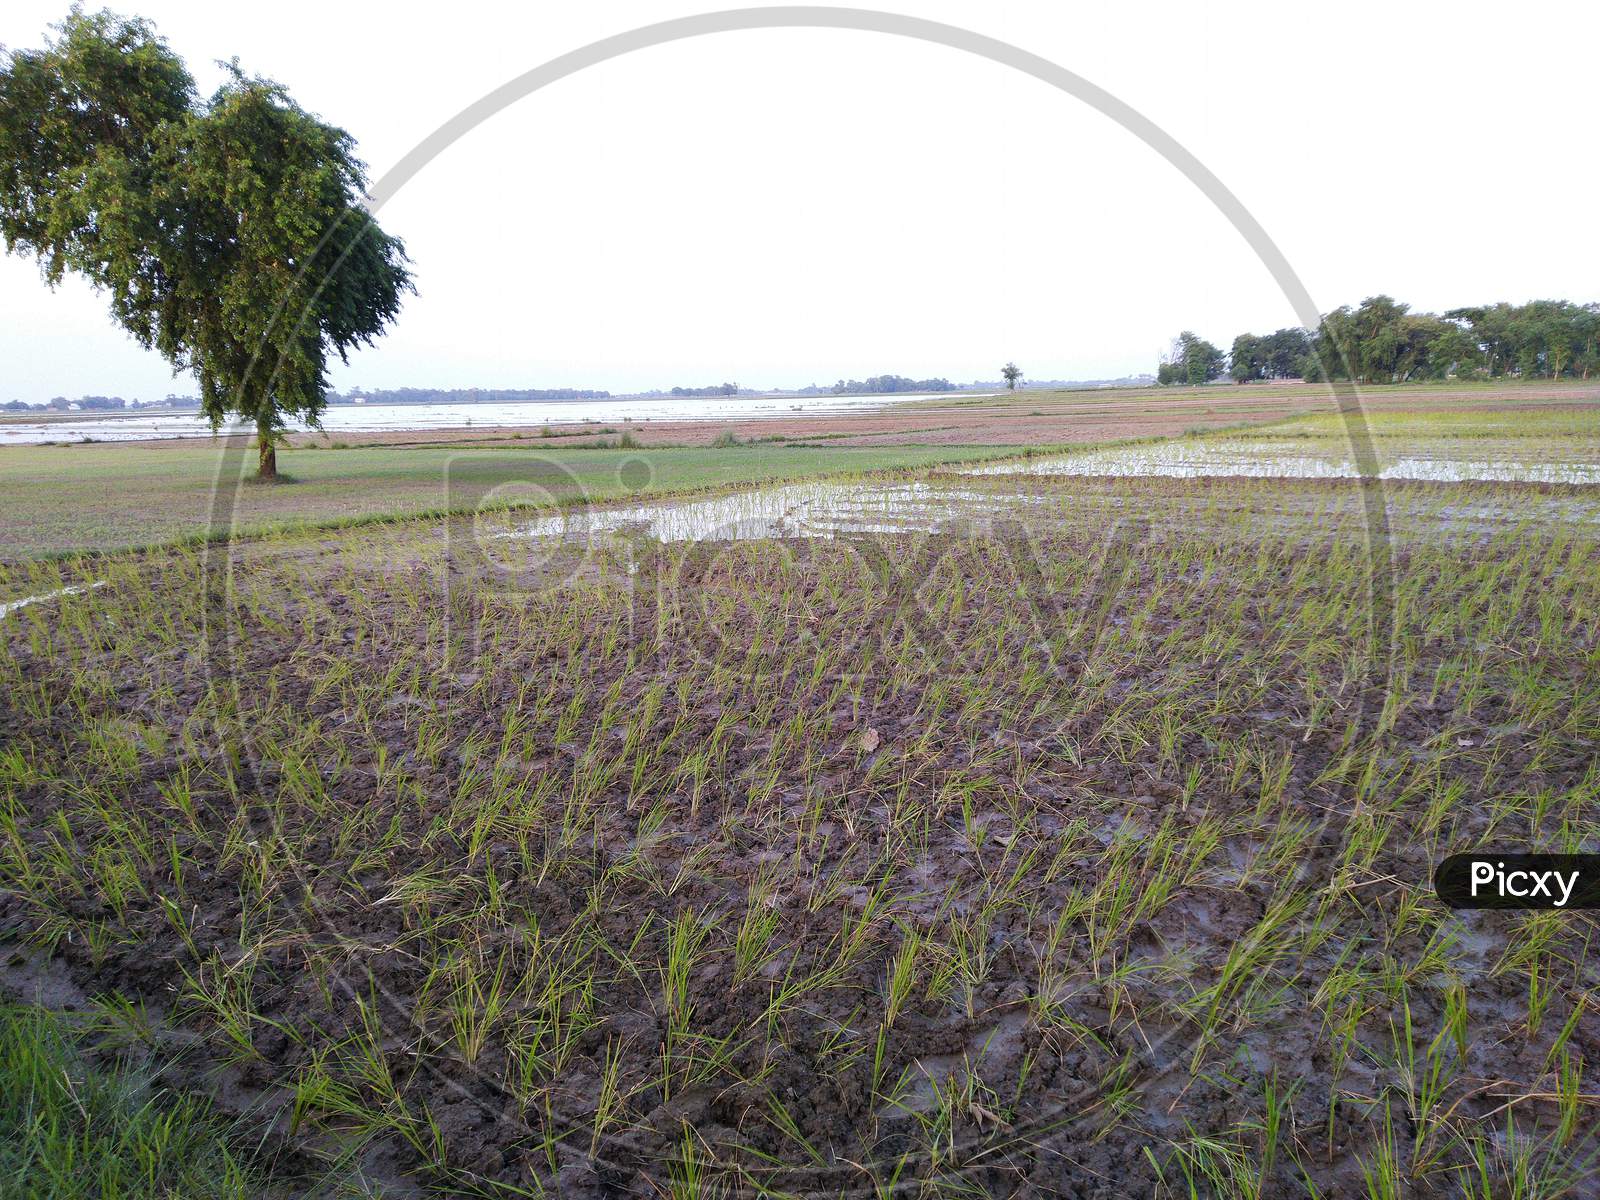 Dhaan crop in rainy season